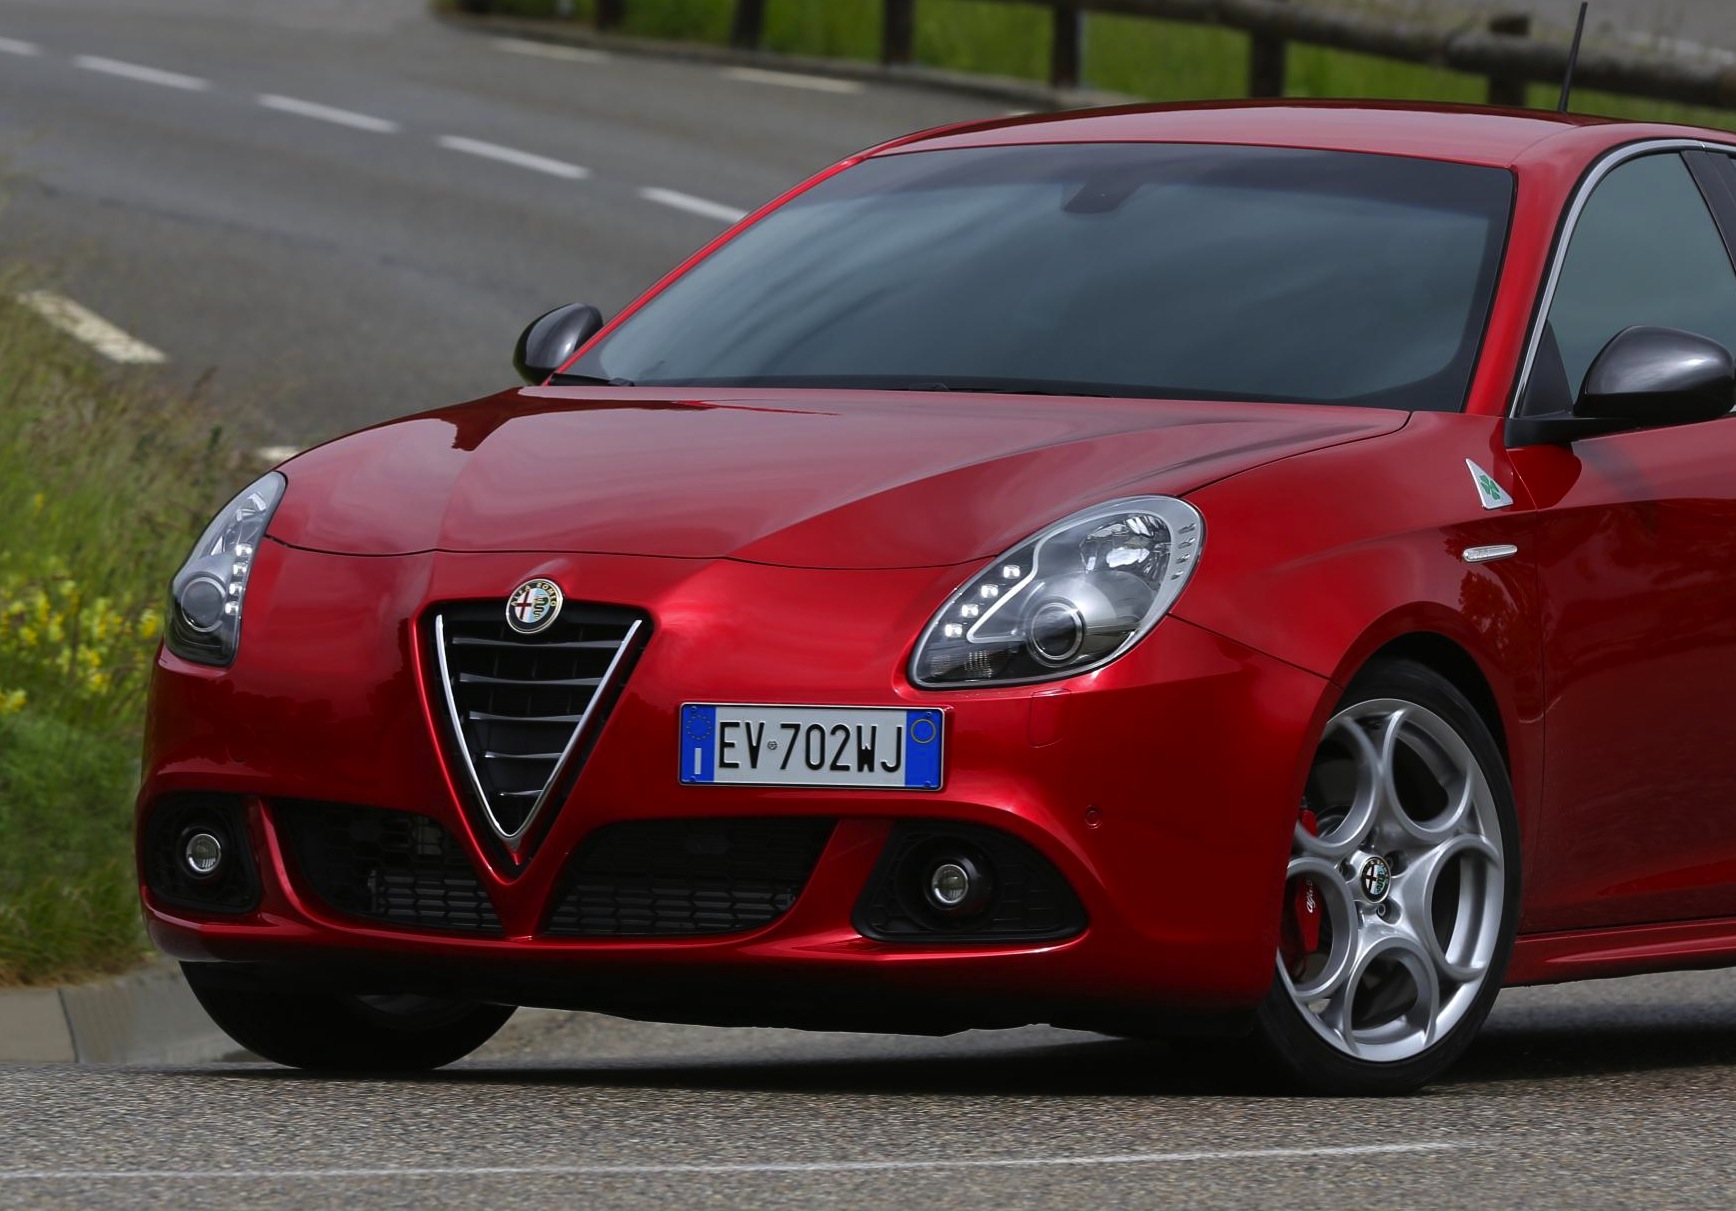 Alfa Romeo Giulia ‘GTA’ in the works, BMW M3 rival